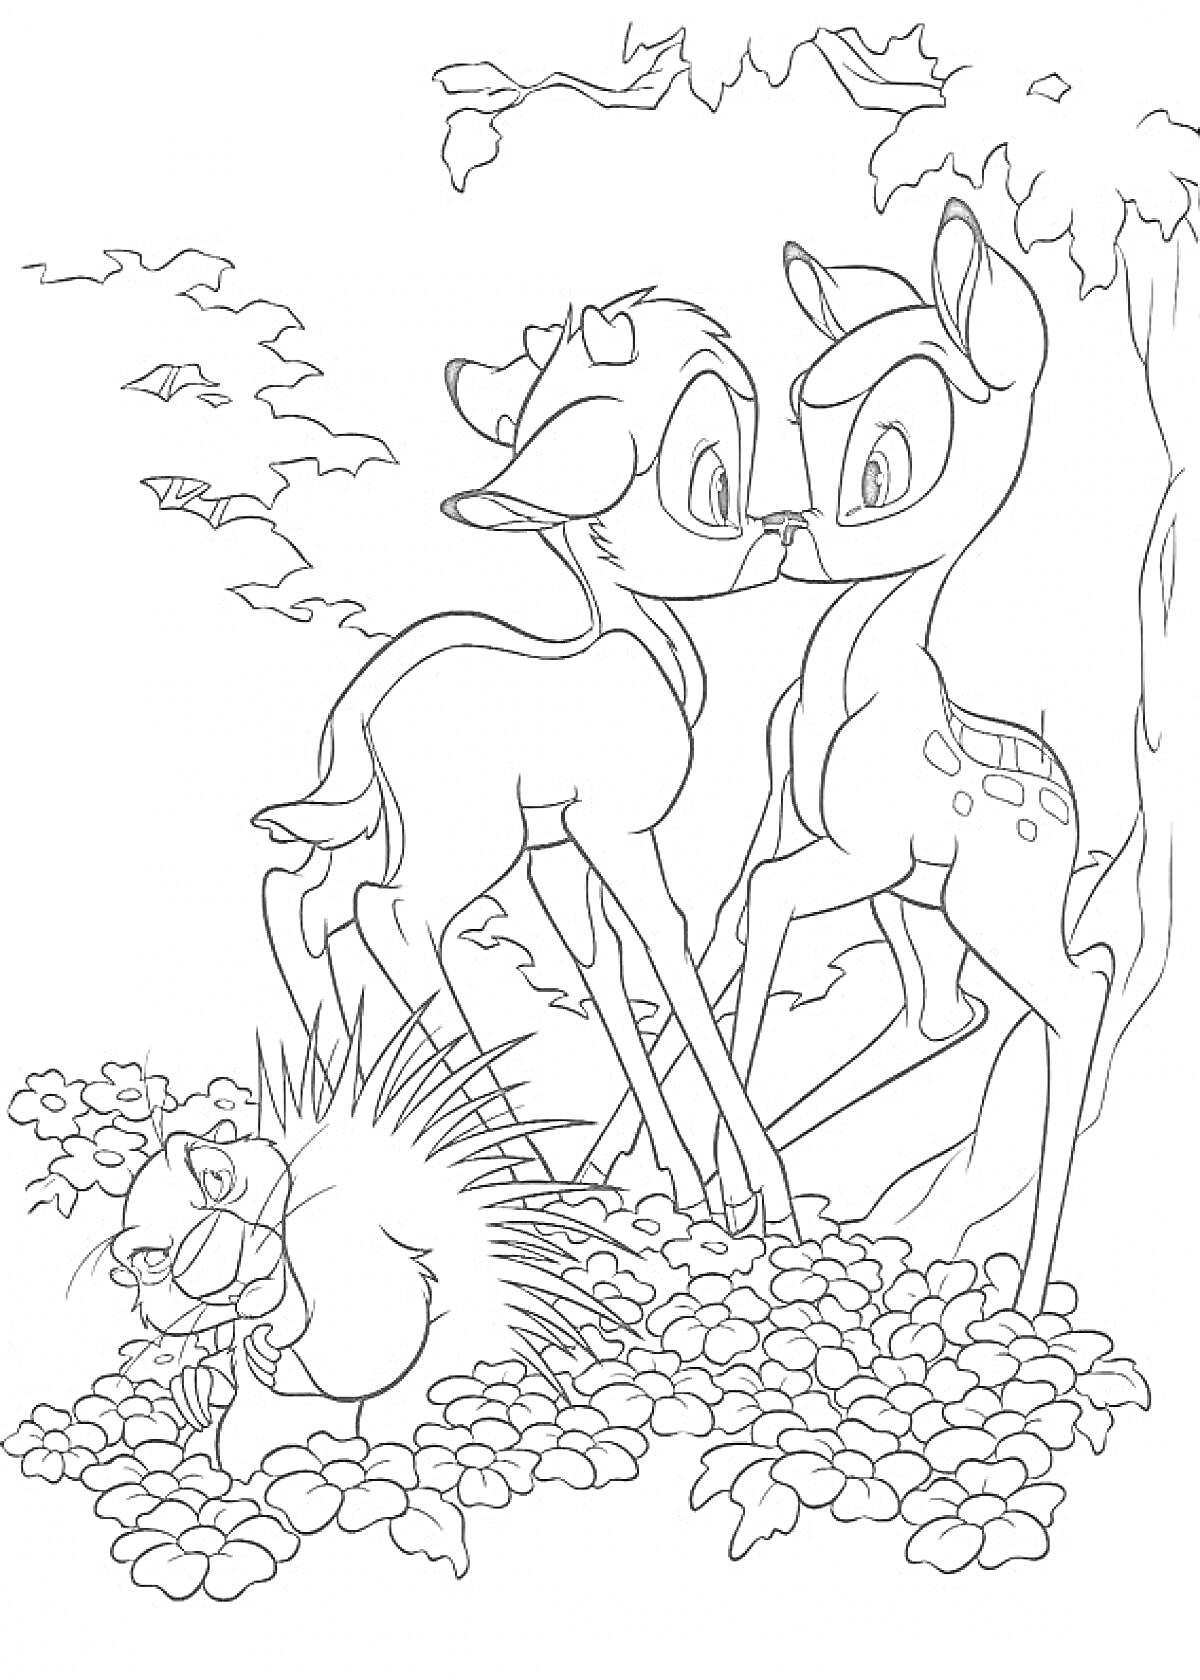 Раскраска Бэмби и его друг среди леса, с енотом на поляне